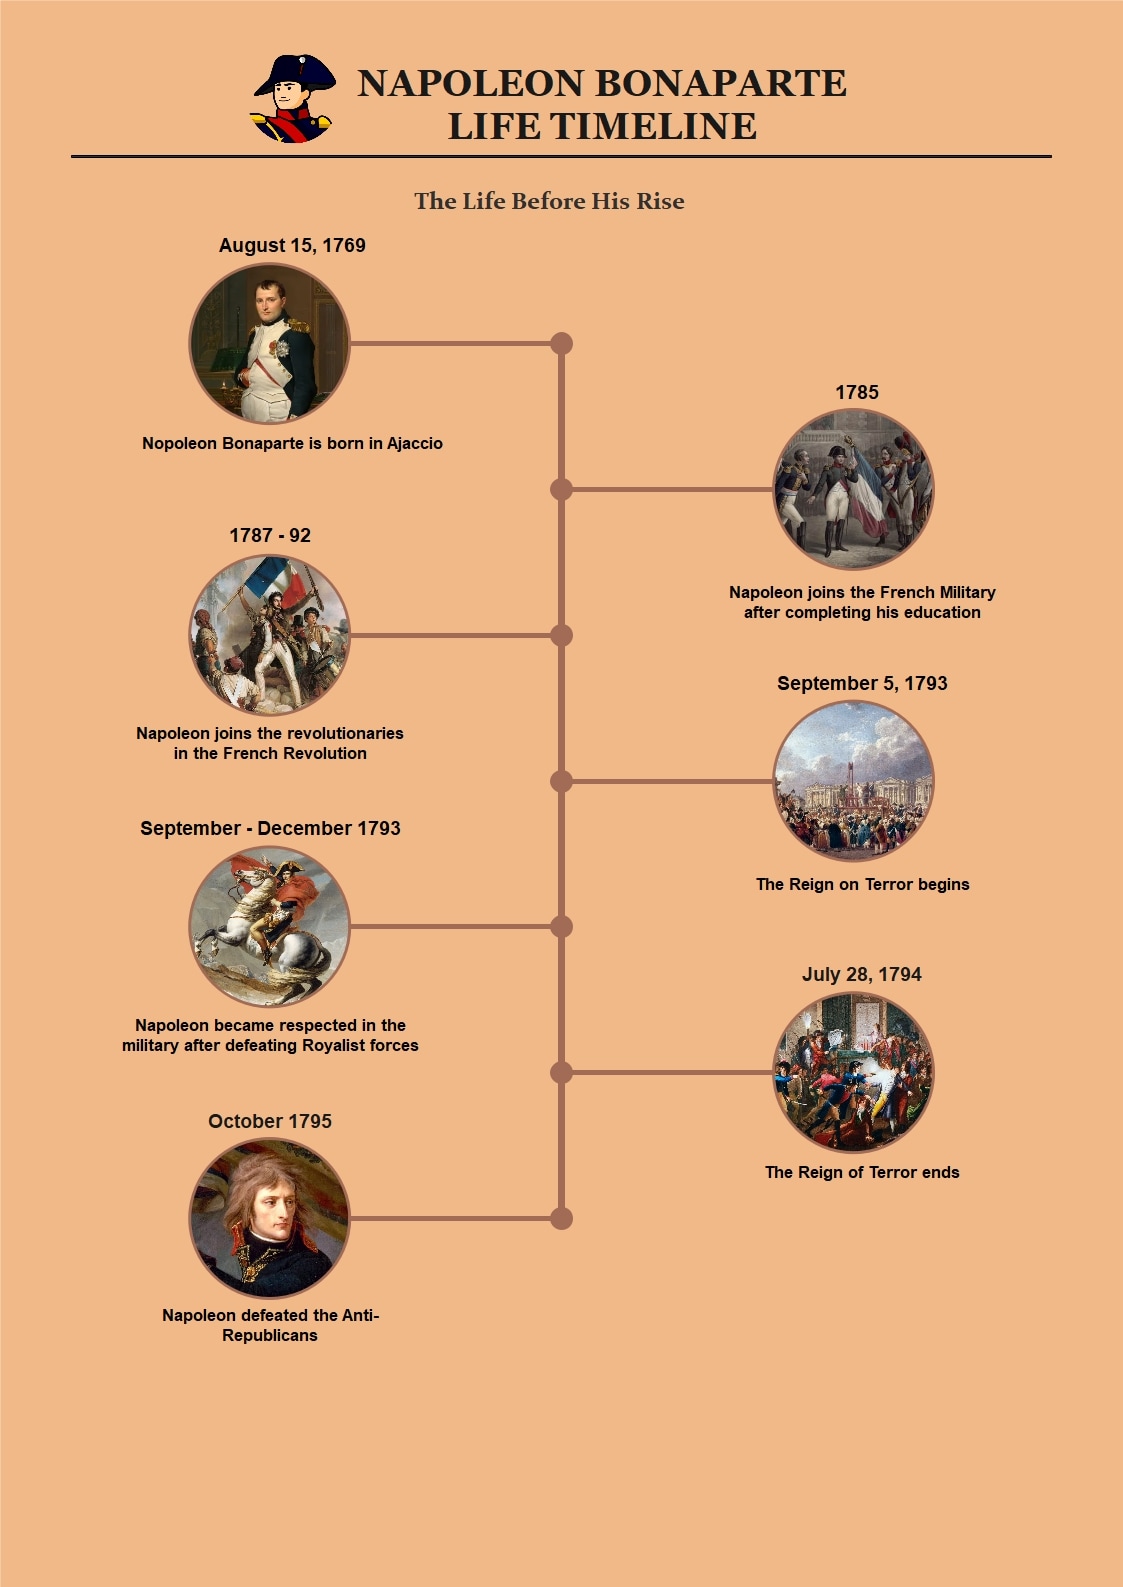 napoleon bonaparte life timeline part 1: life before his rise to power